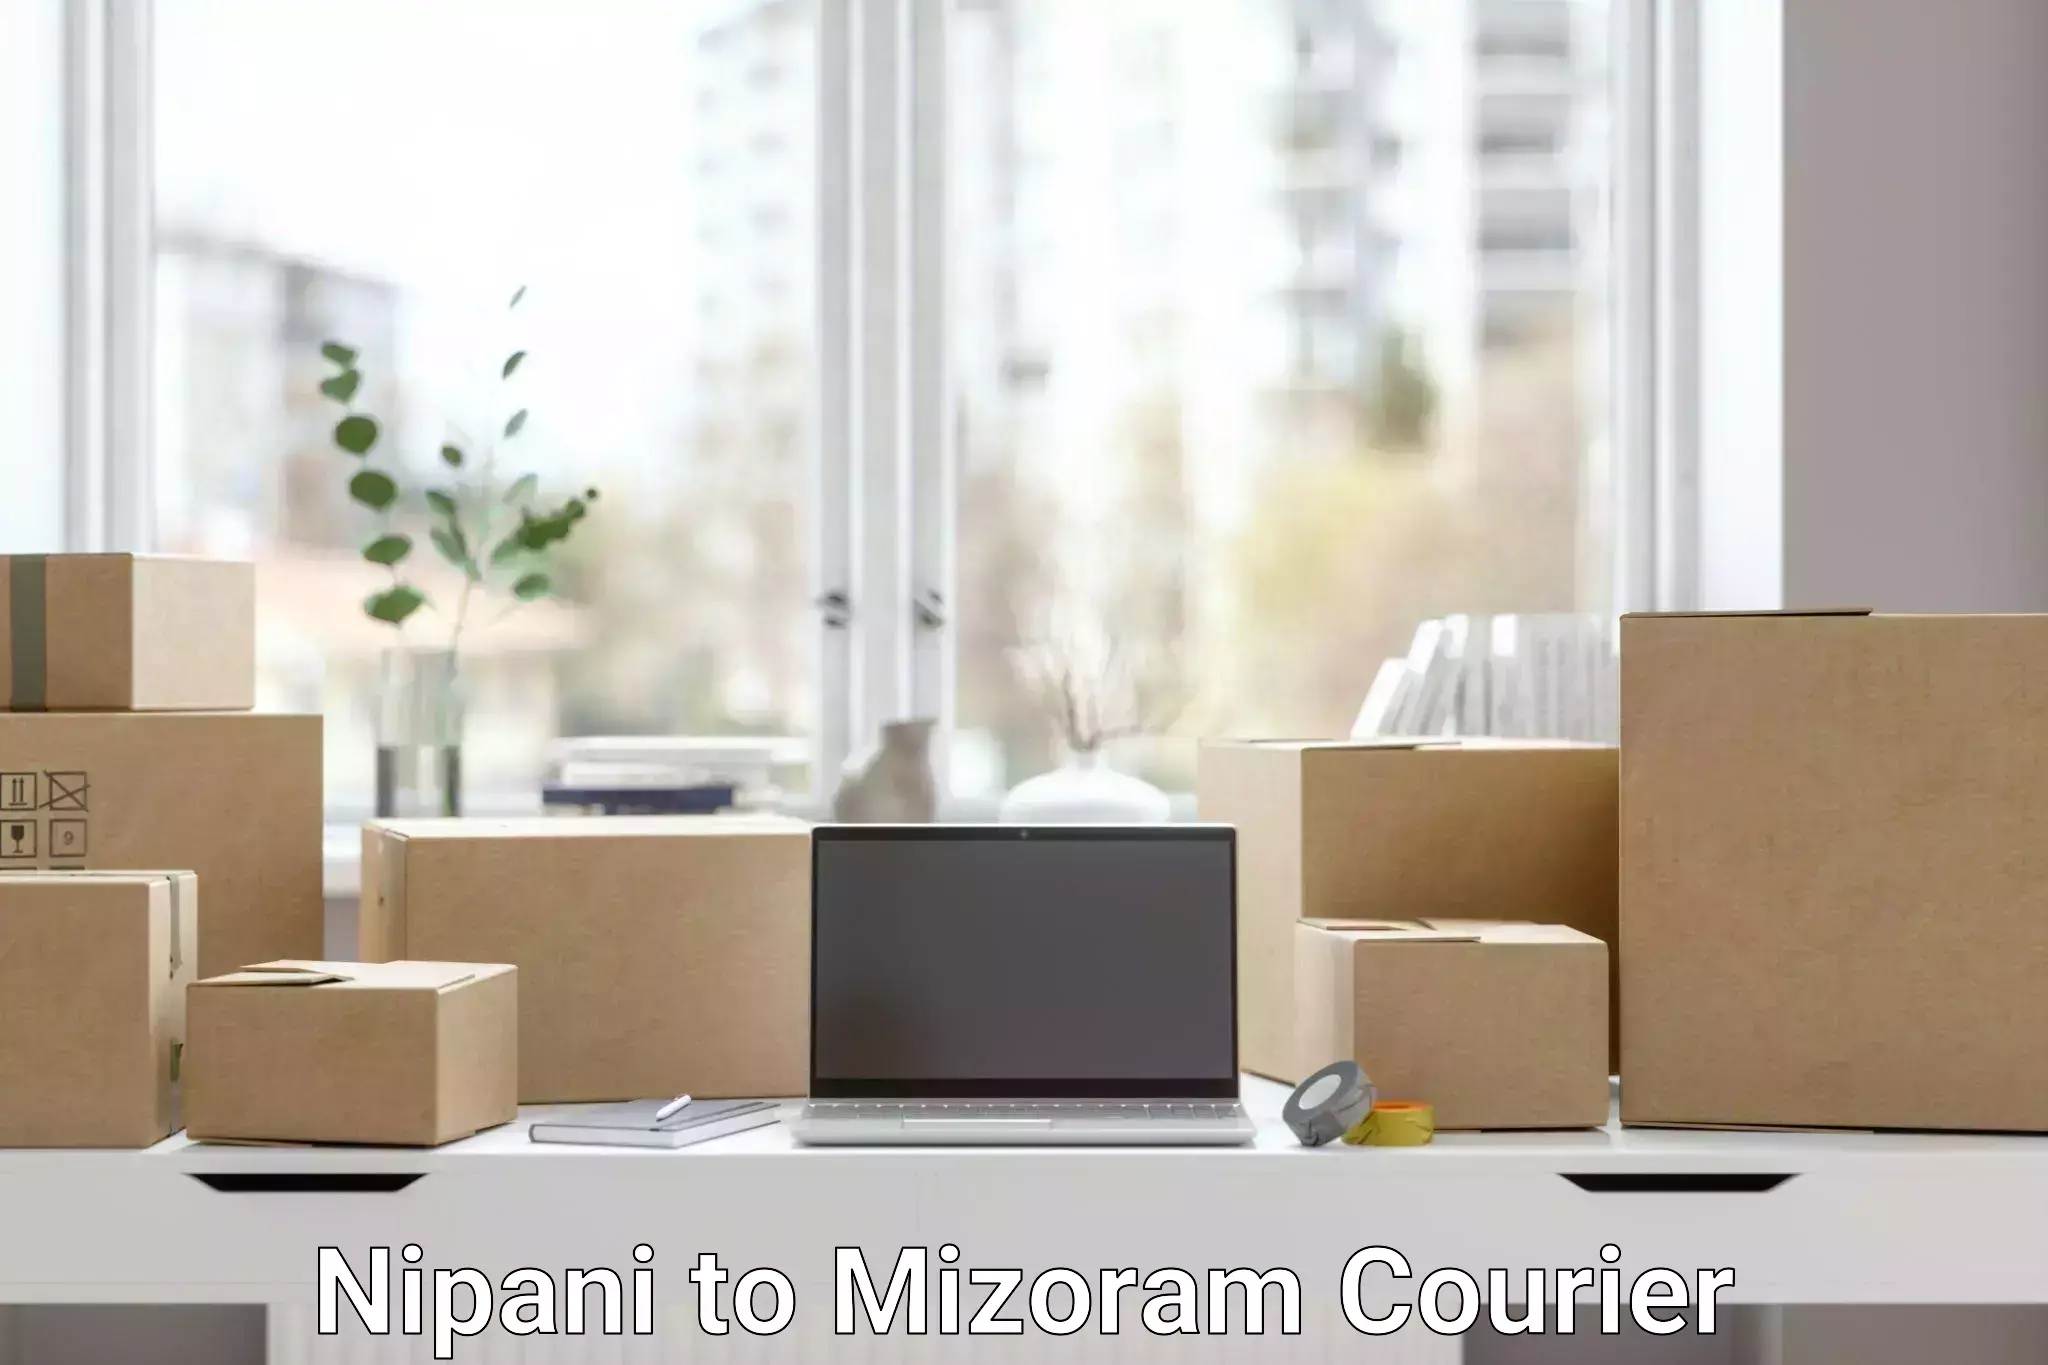 Full-service courier options Nipani to Mizoram